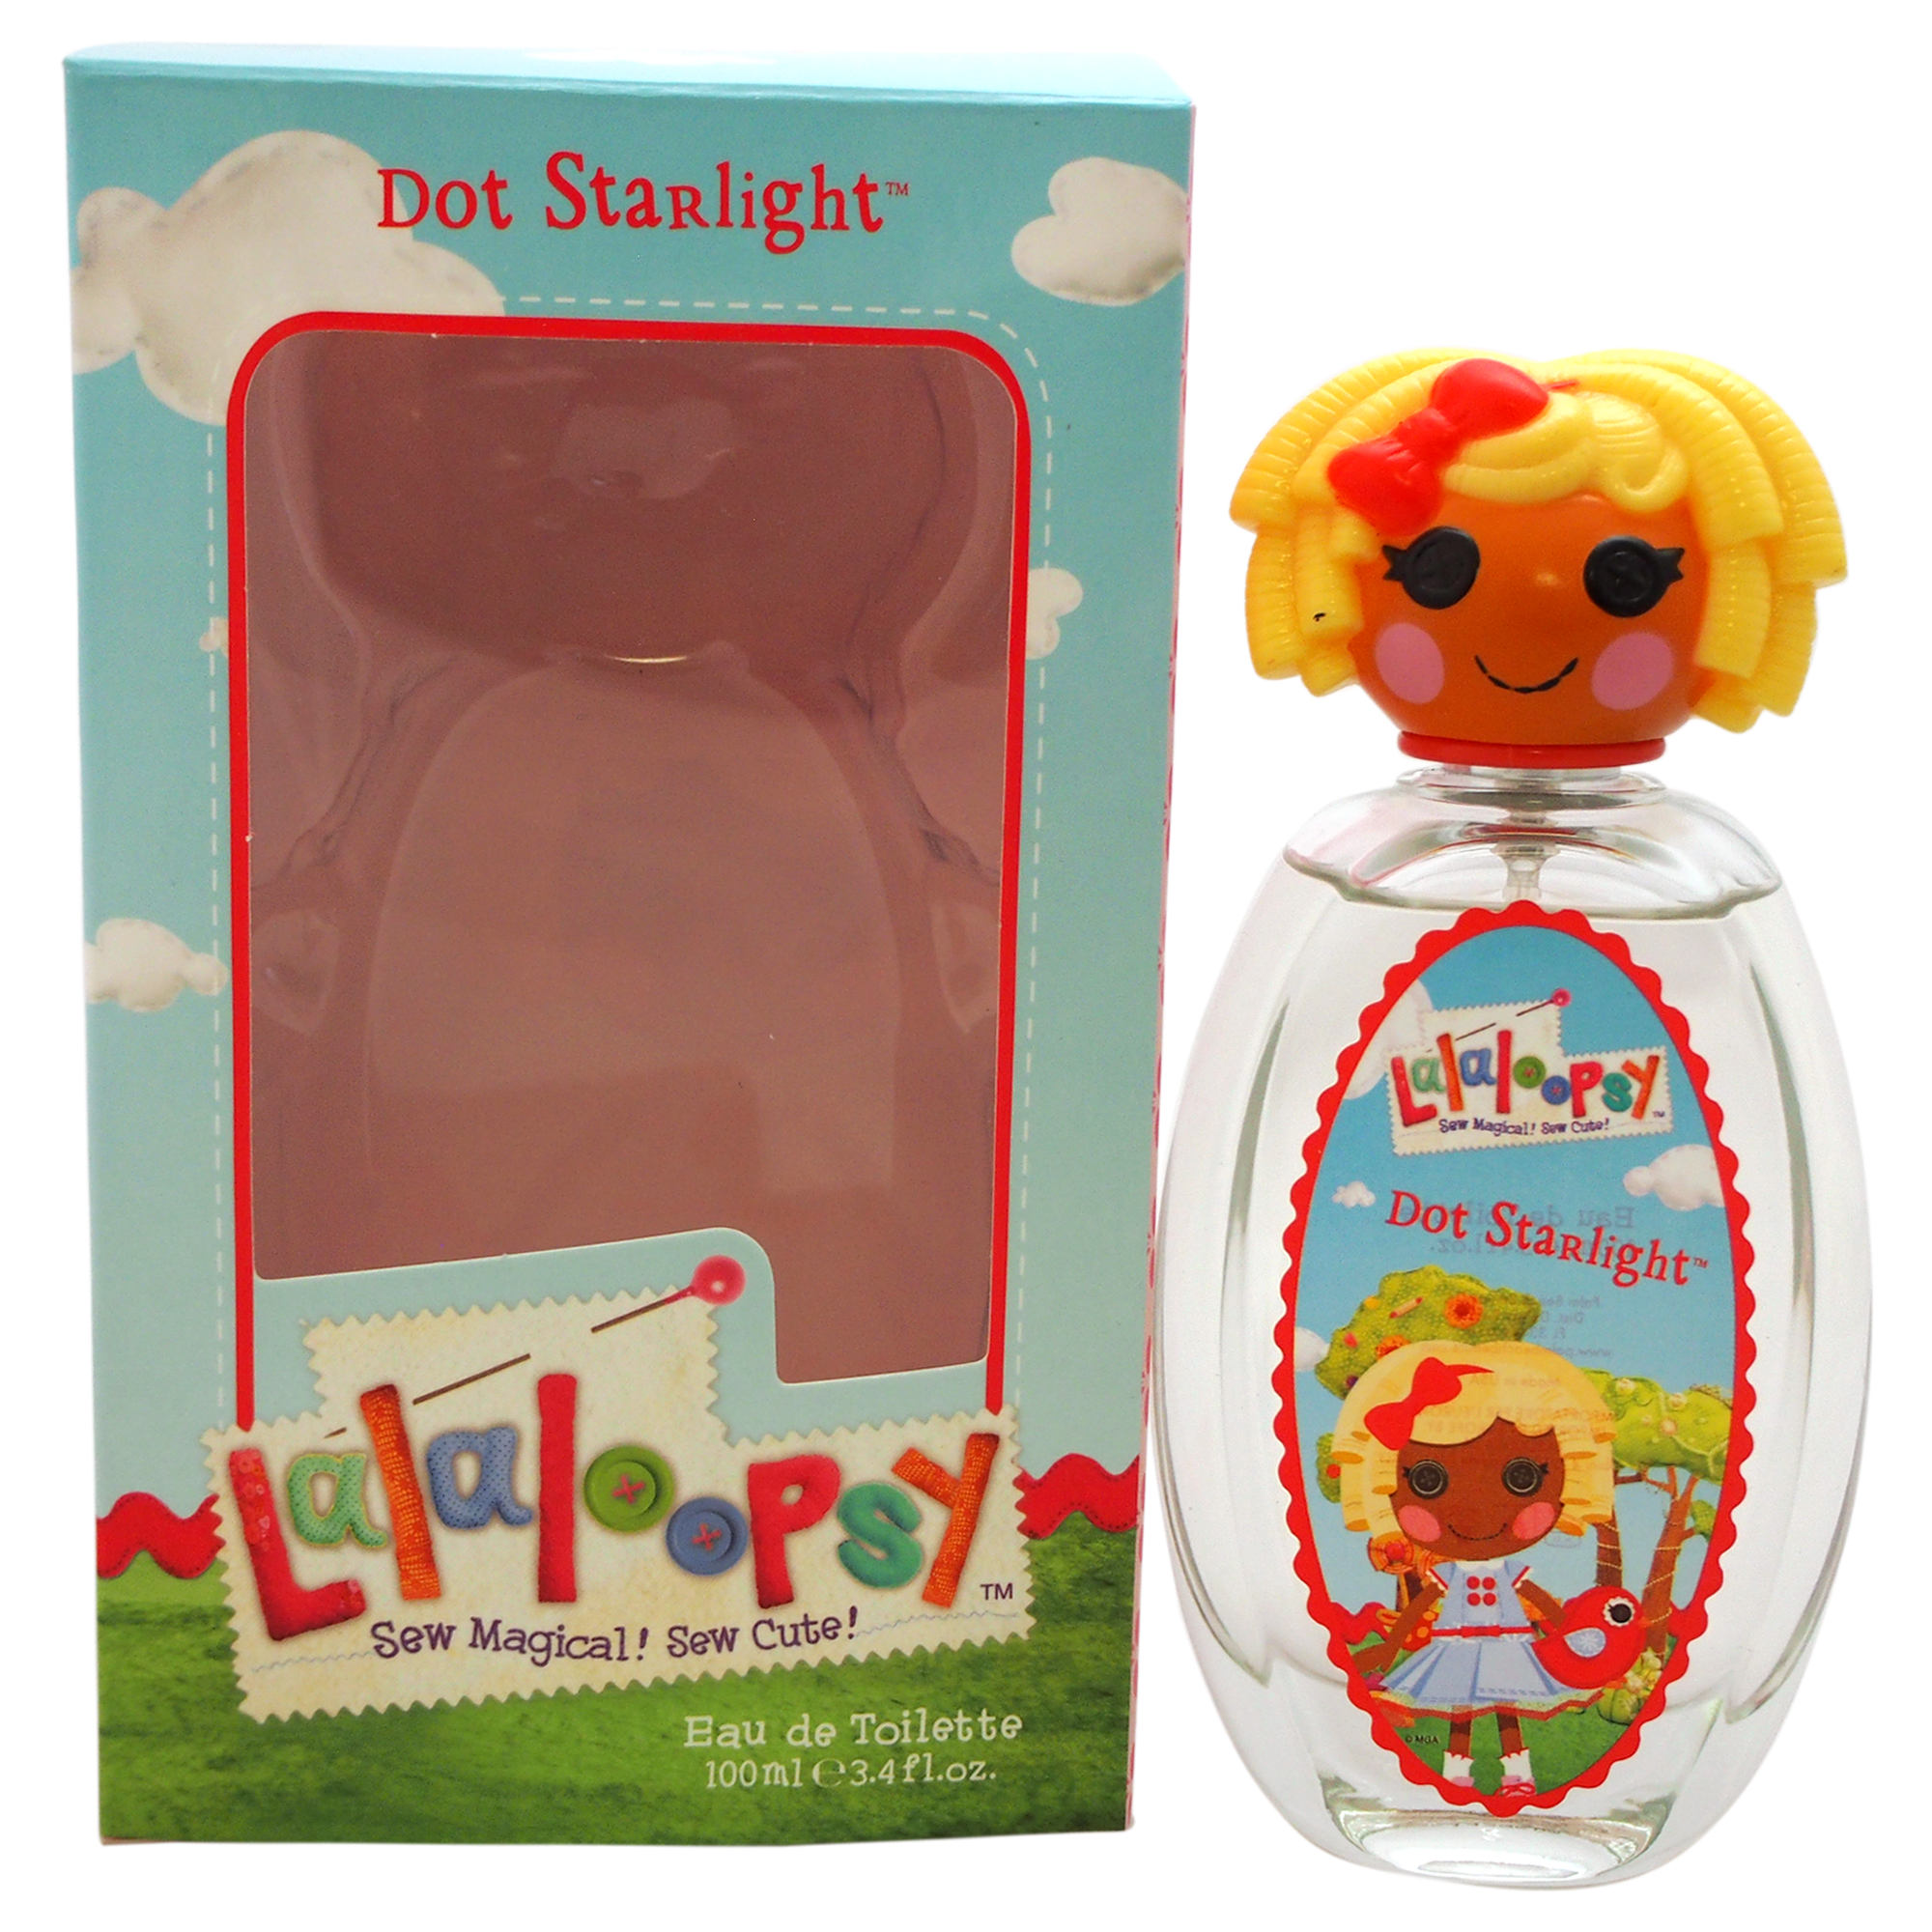 Dot Starlight by LalaLoopsy for Kids - 3.4 oz EDT Spray